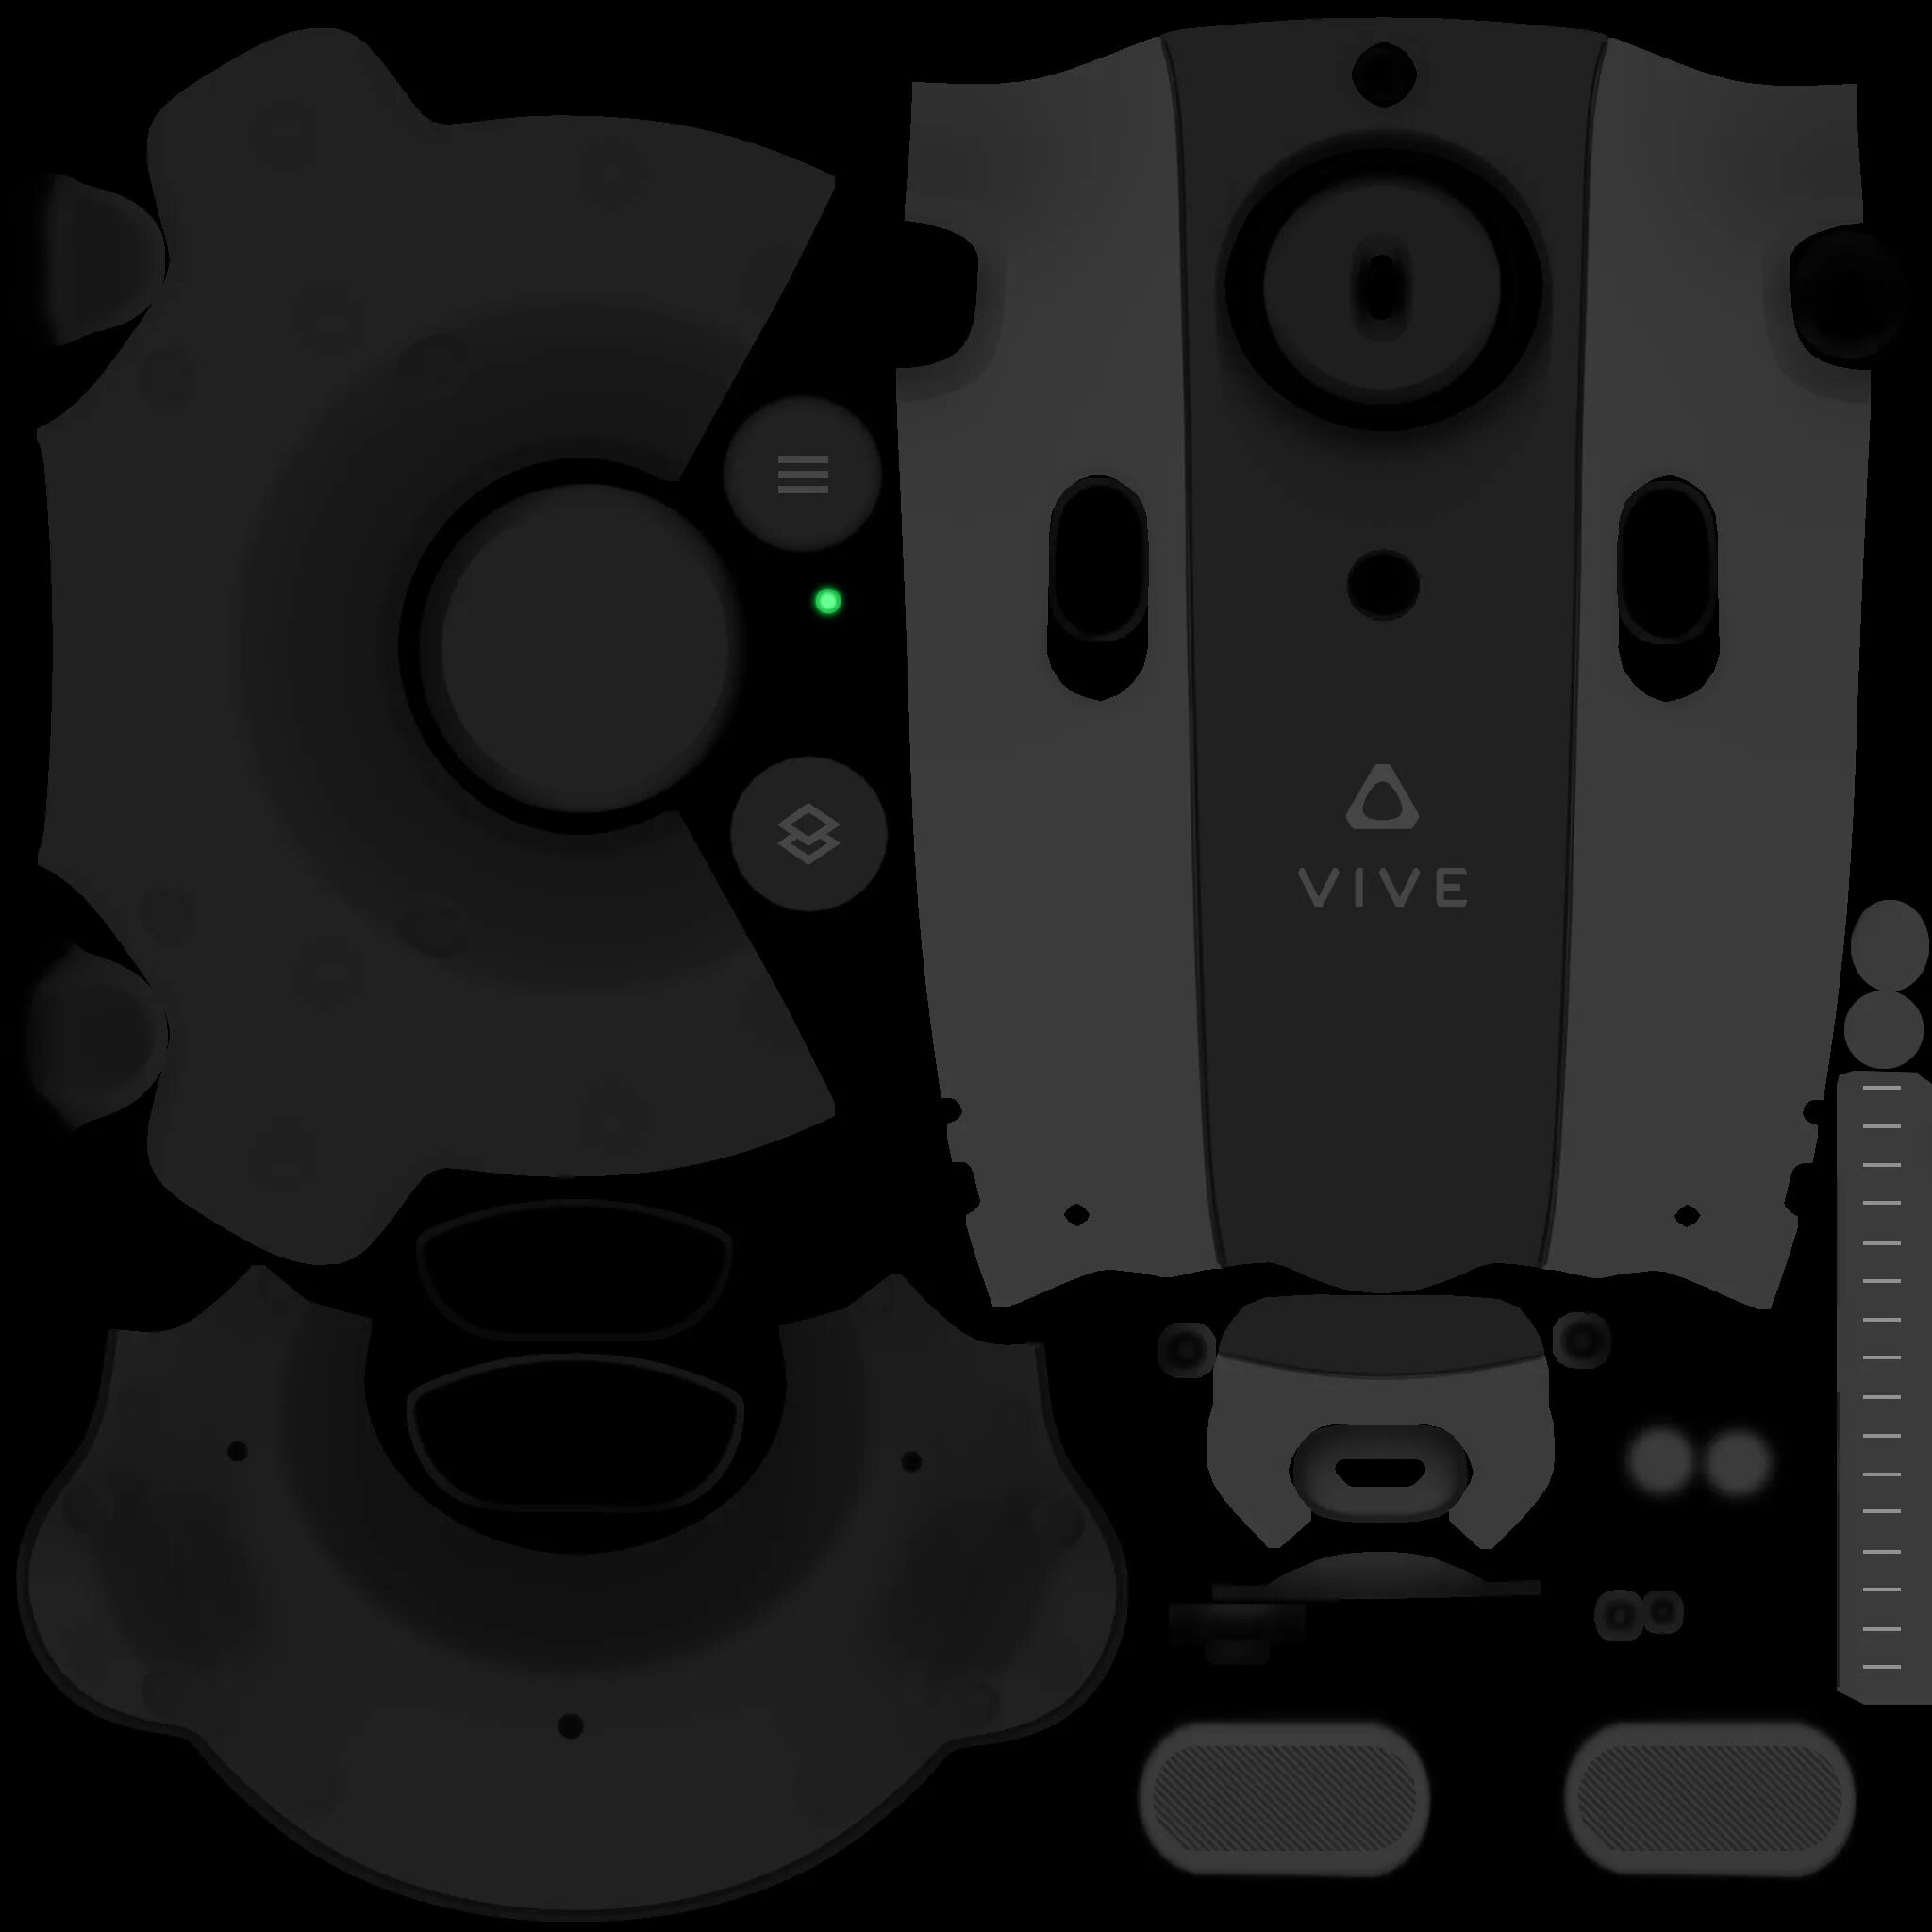 Модель Cell Vive. Материнская плата контроллера HTC Vive.